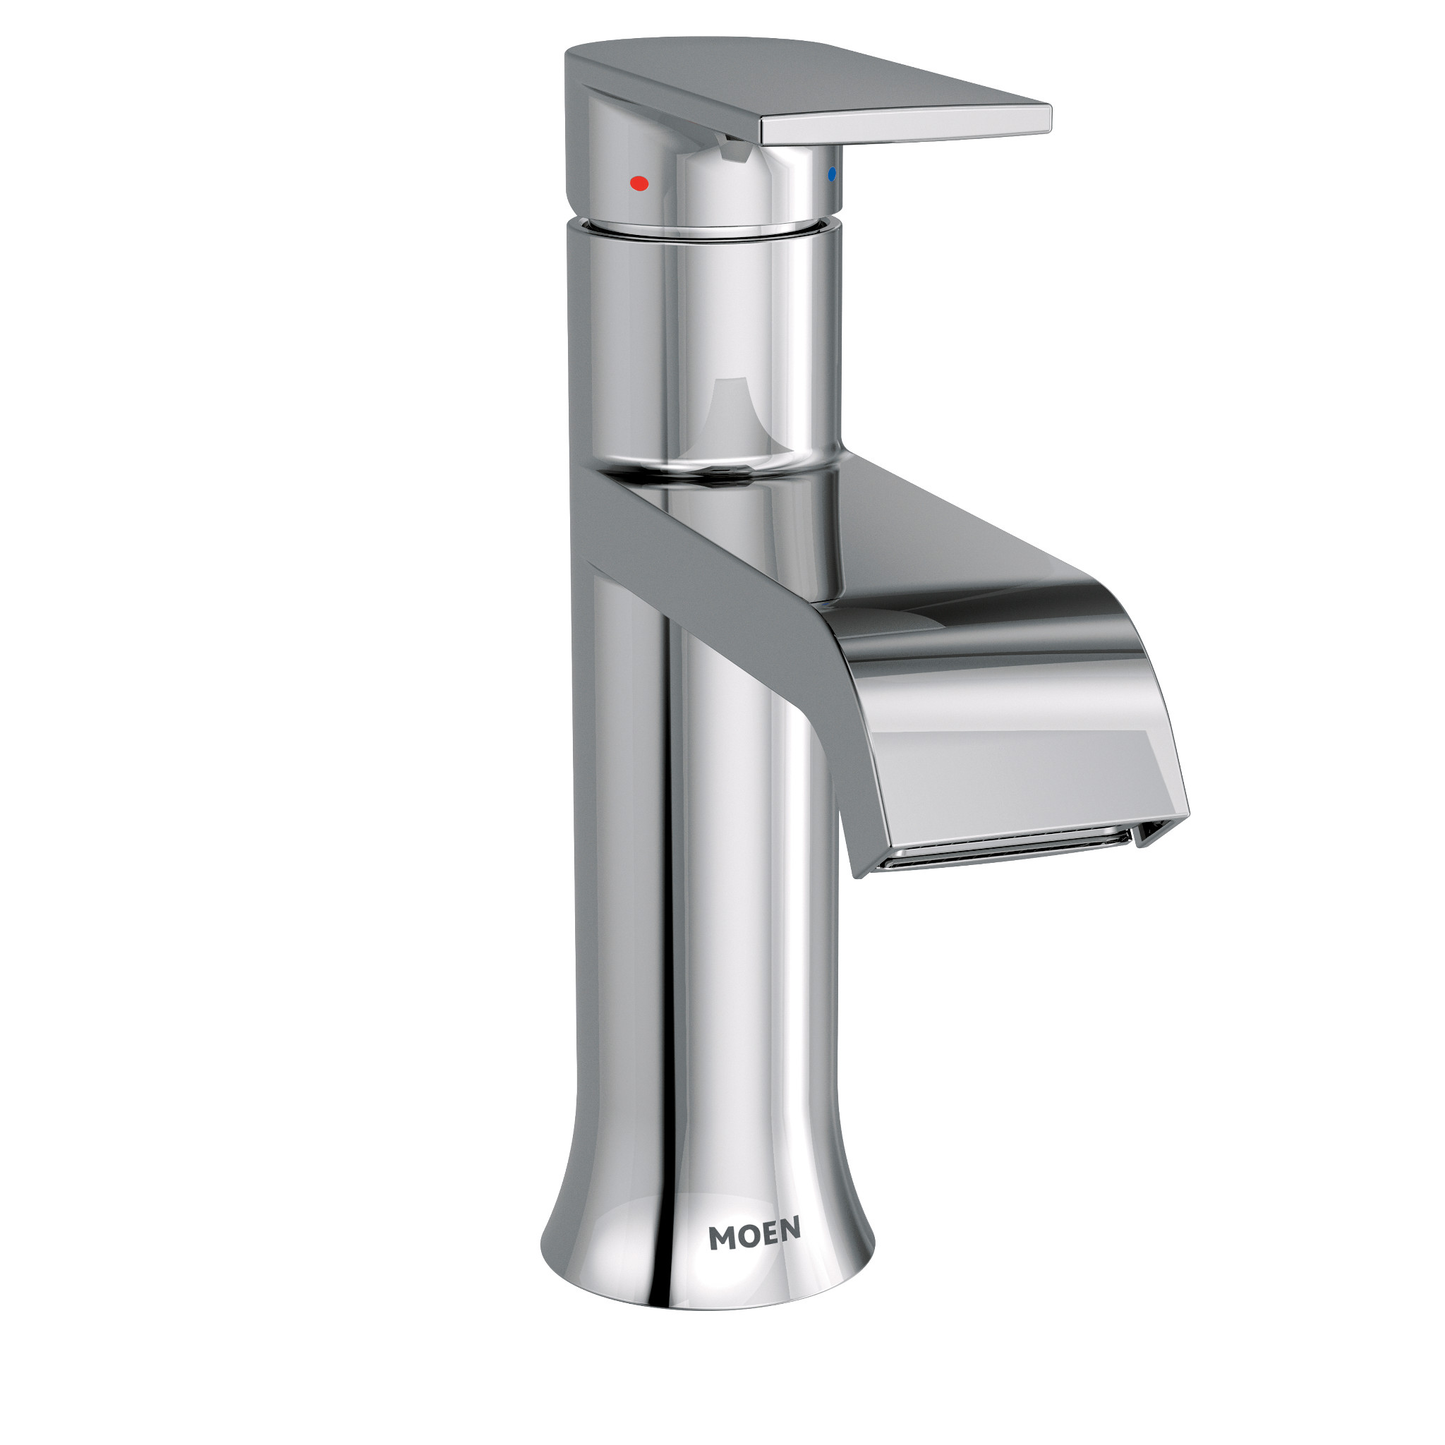 Genta Chrome One-Handle High Arc Bathroom Faucet